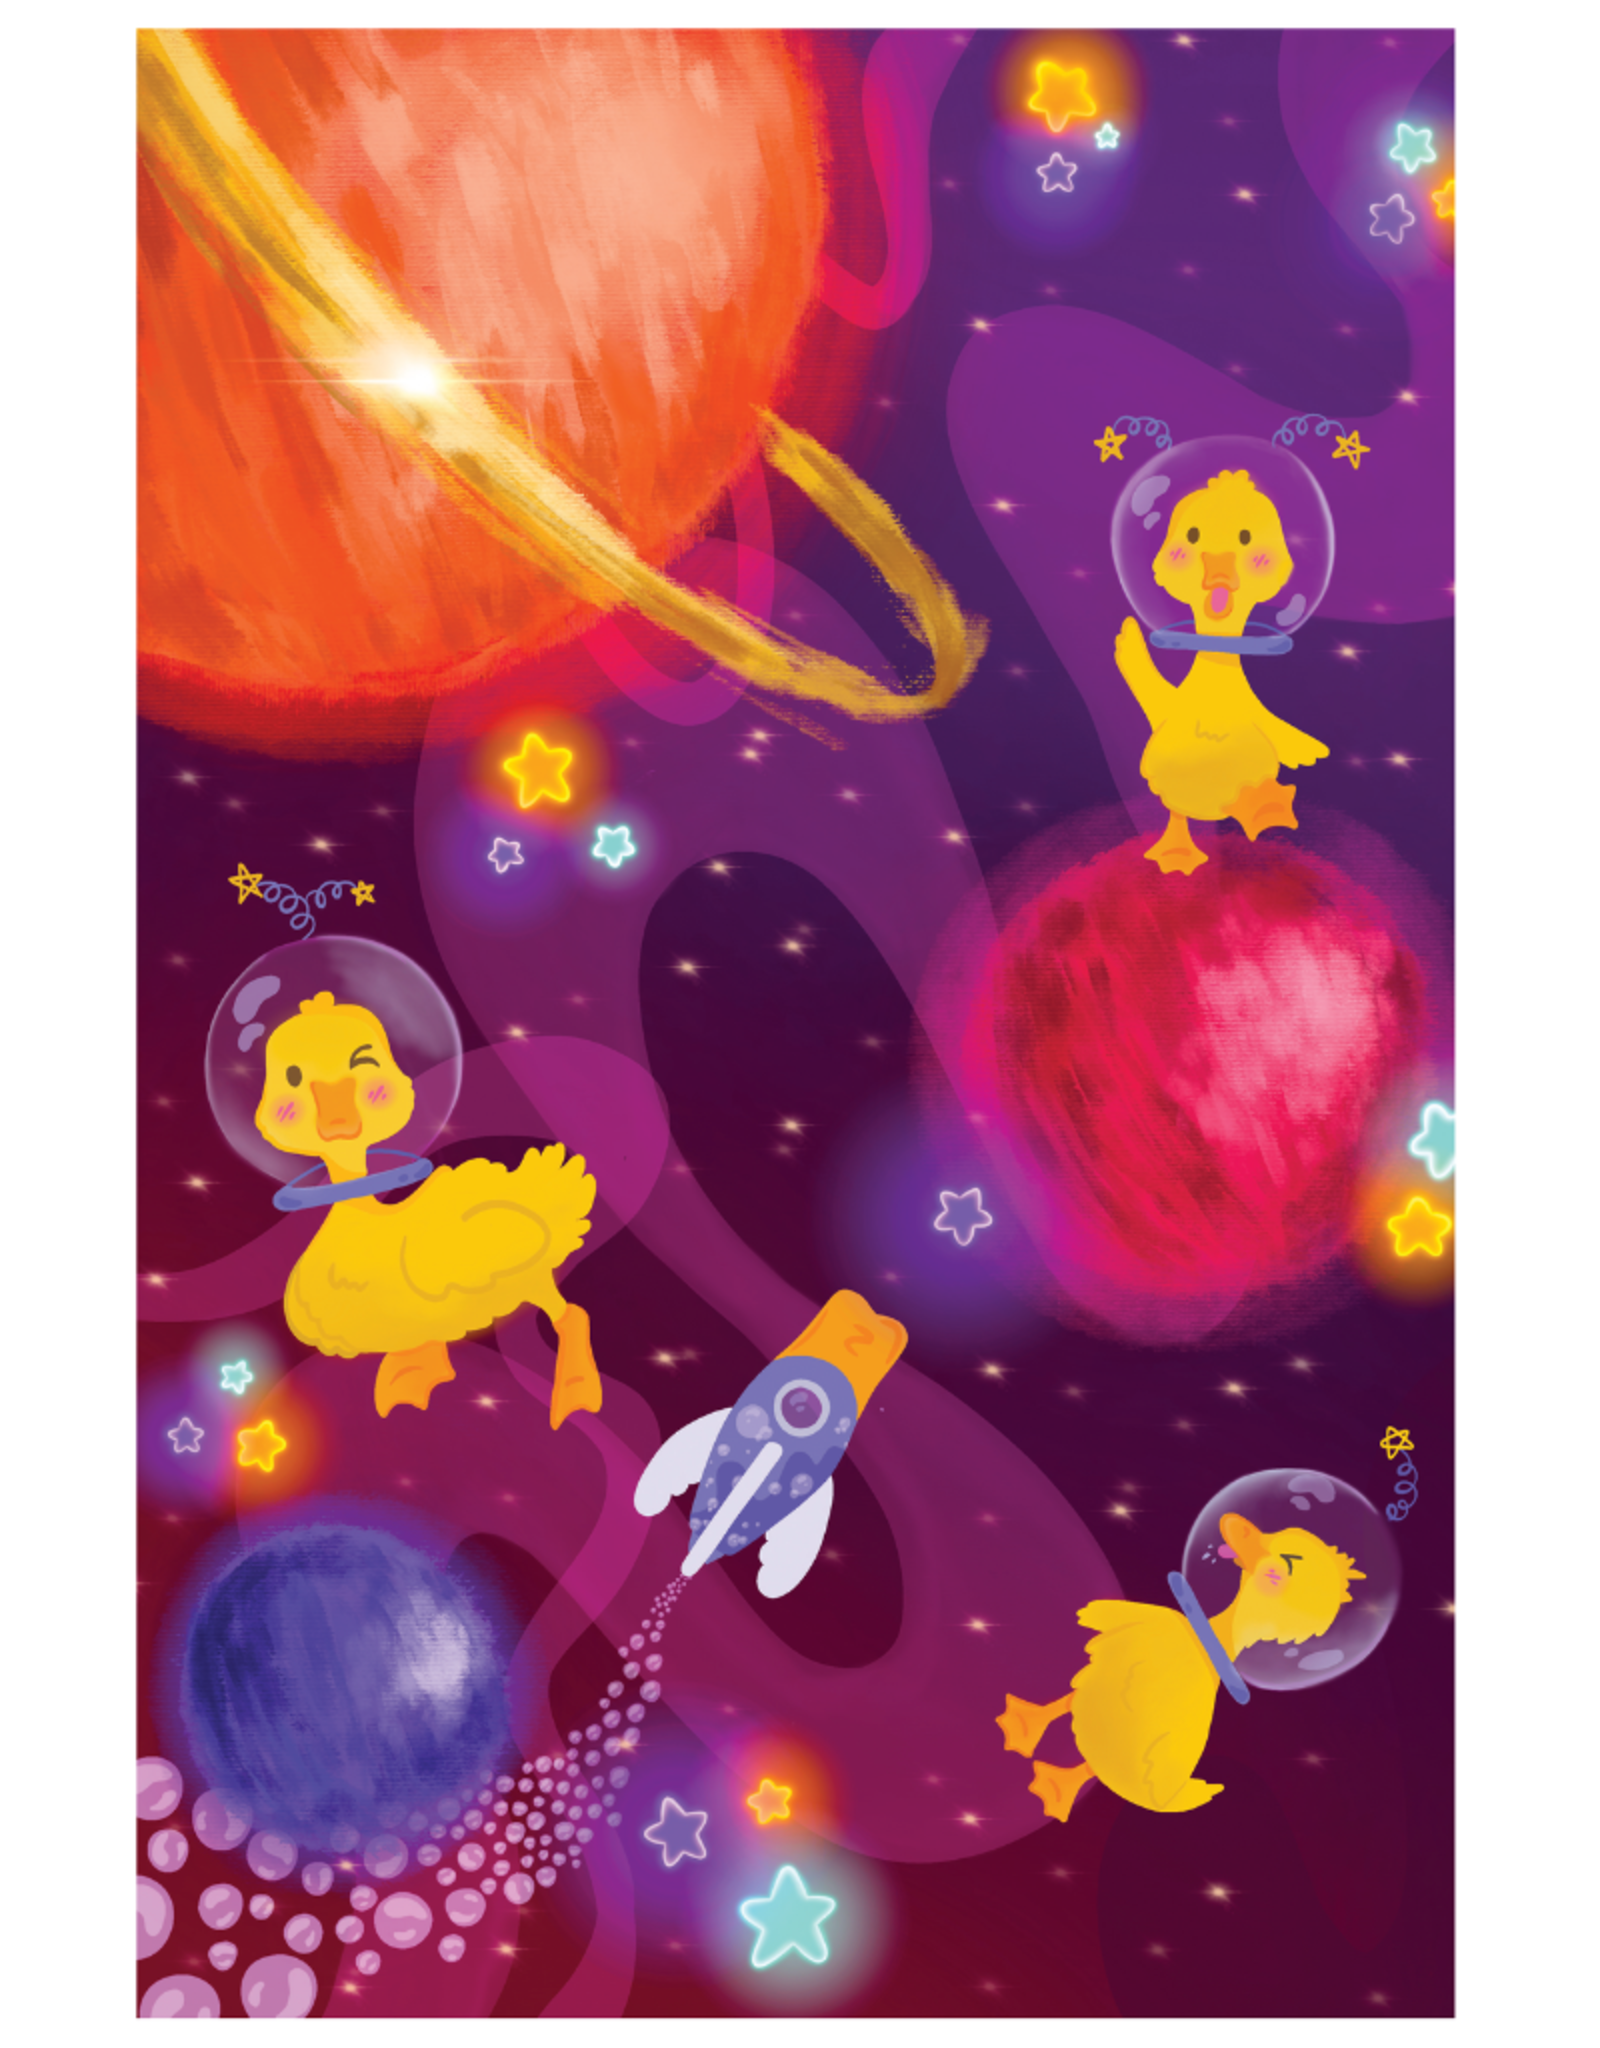 "Astro Ducks!" poster (12" x 18") by Dahlia Pena